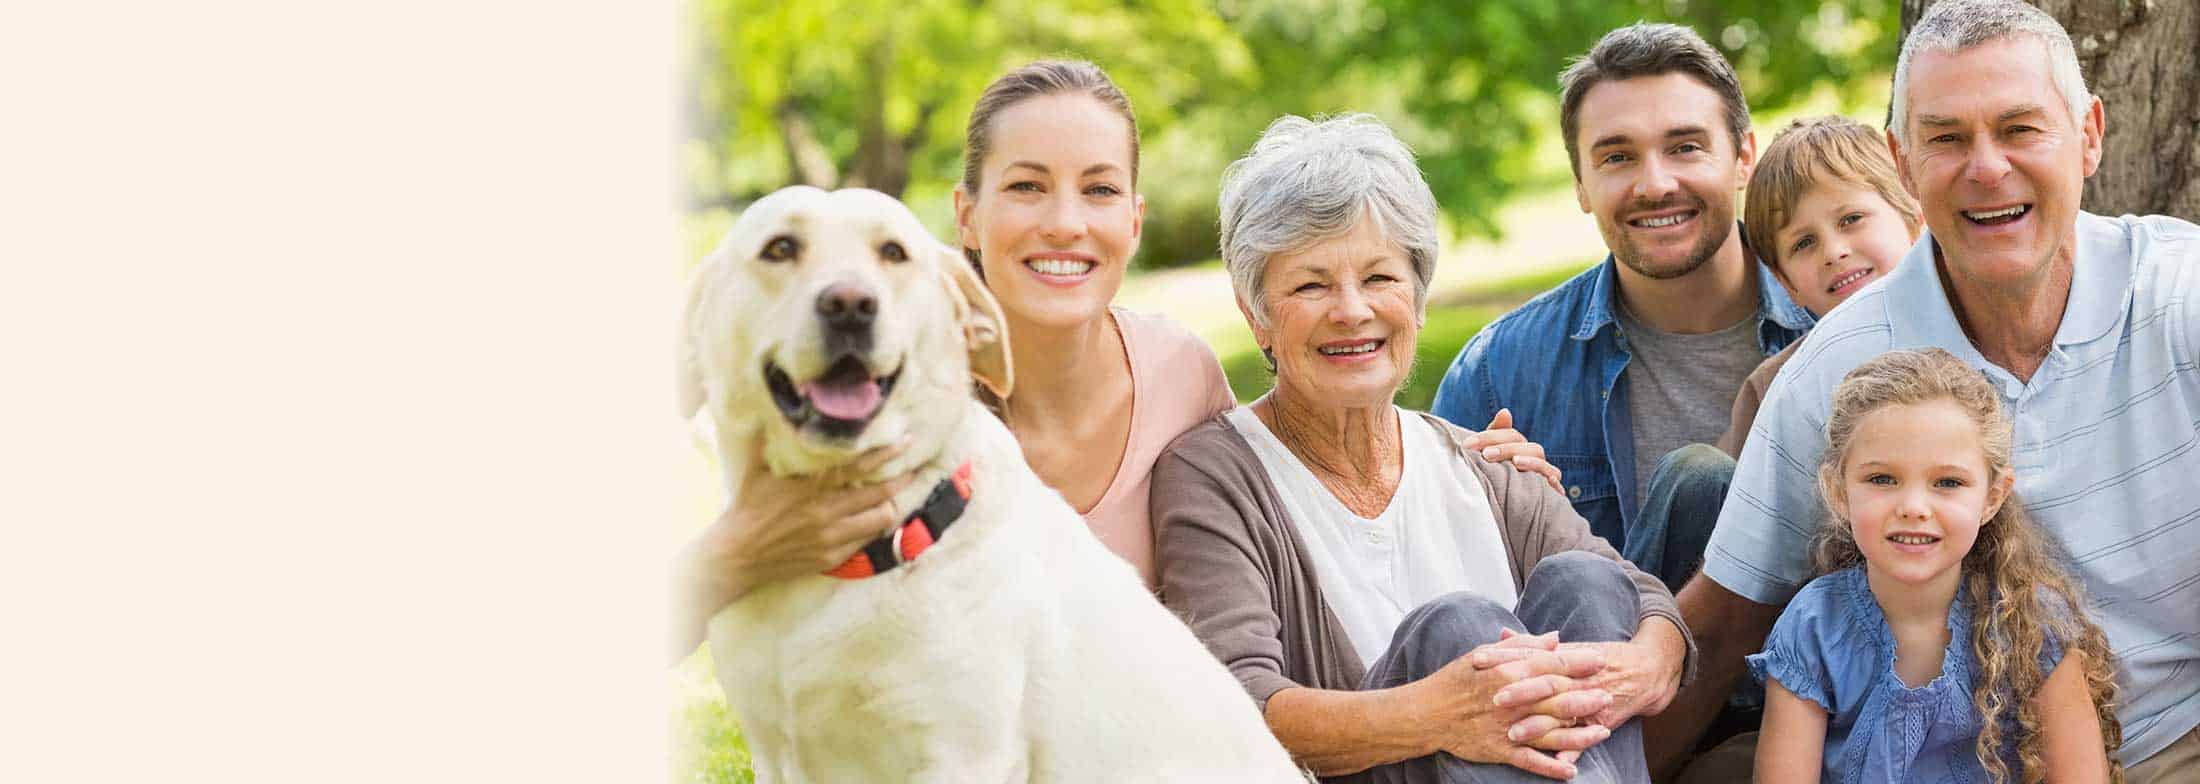 Family with dog smiling towards camera